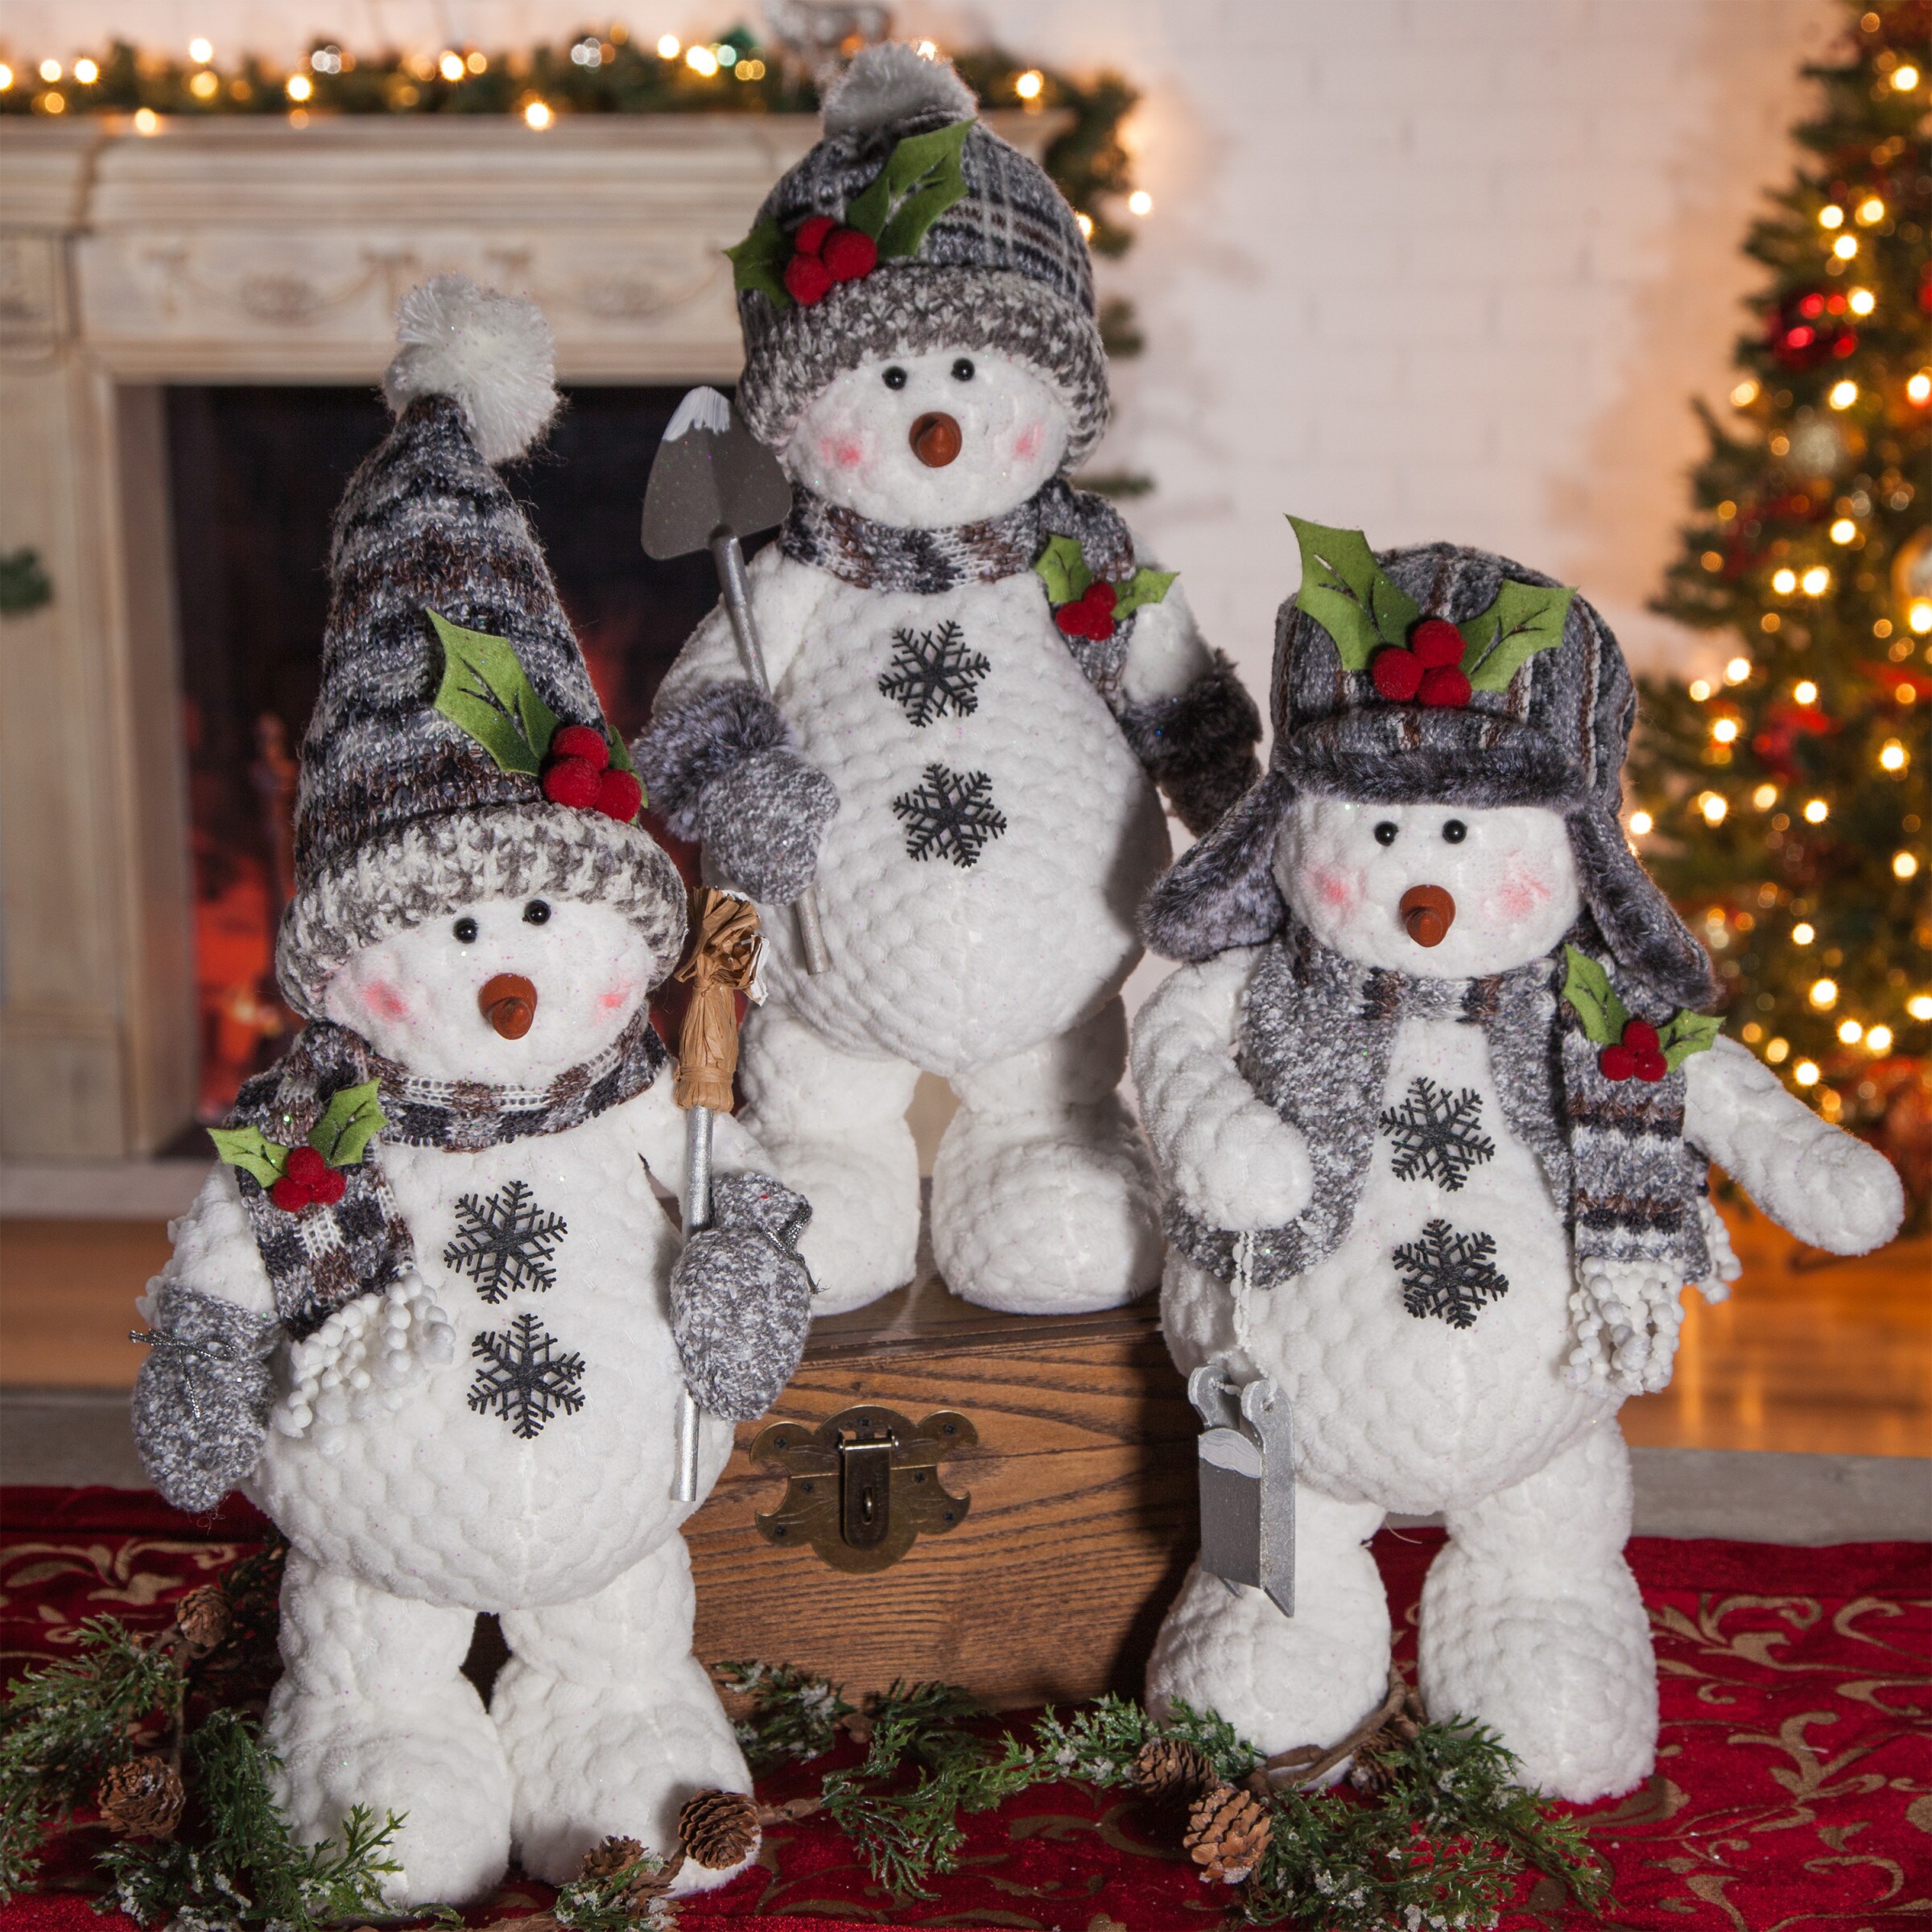 Stocking Stuffer Gift Snowman DIY Ornaments Arts/Crafts Fun Boy/Girl Lot of 2 